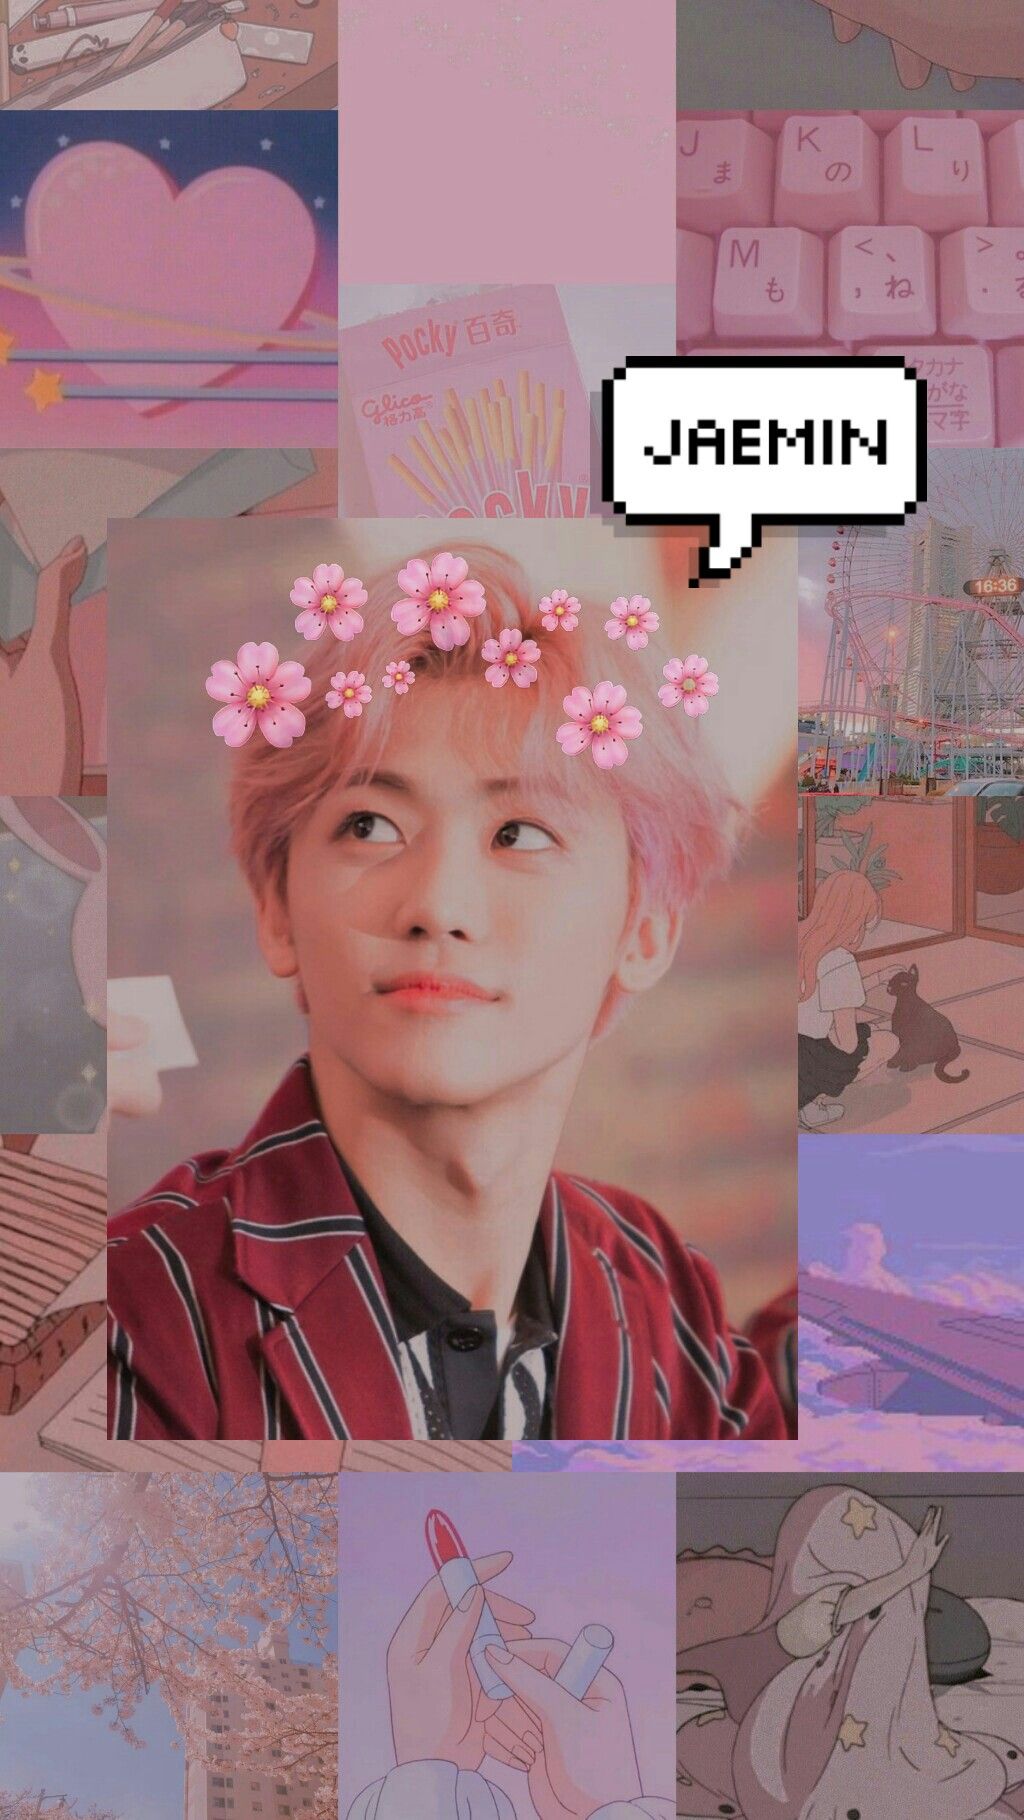 NCT Dream 'Jaemin' in Ridin' MV - Reload Album Shoot 4K wallpaper download